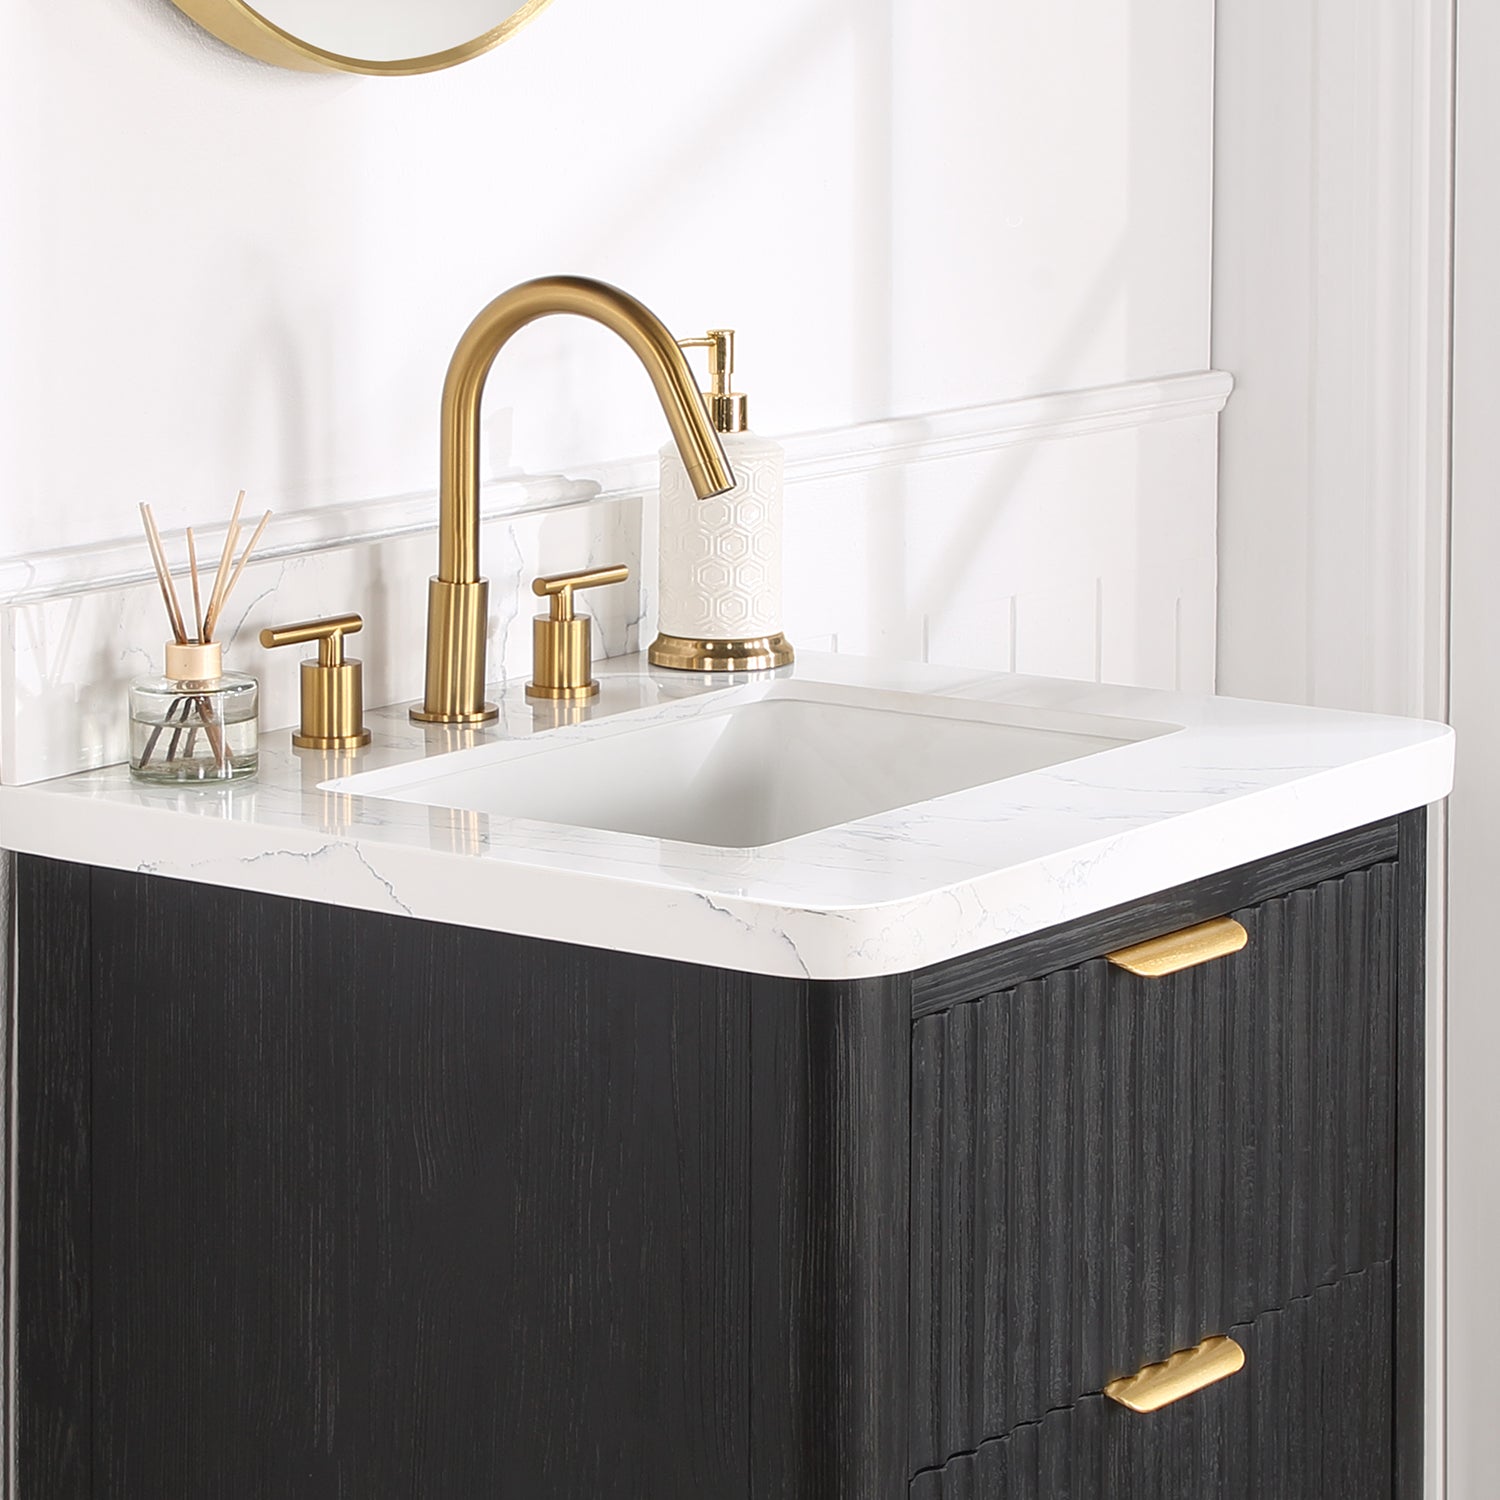 Cádiz 24in. Free-standing Single Bathroom Vanity in Fir Wood Black with Composite top in Lightning White